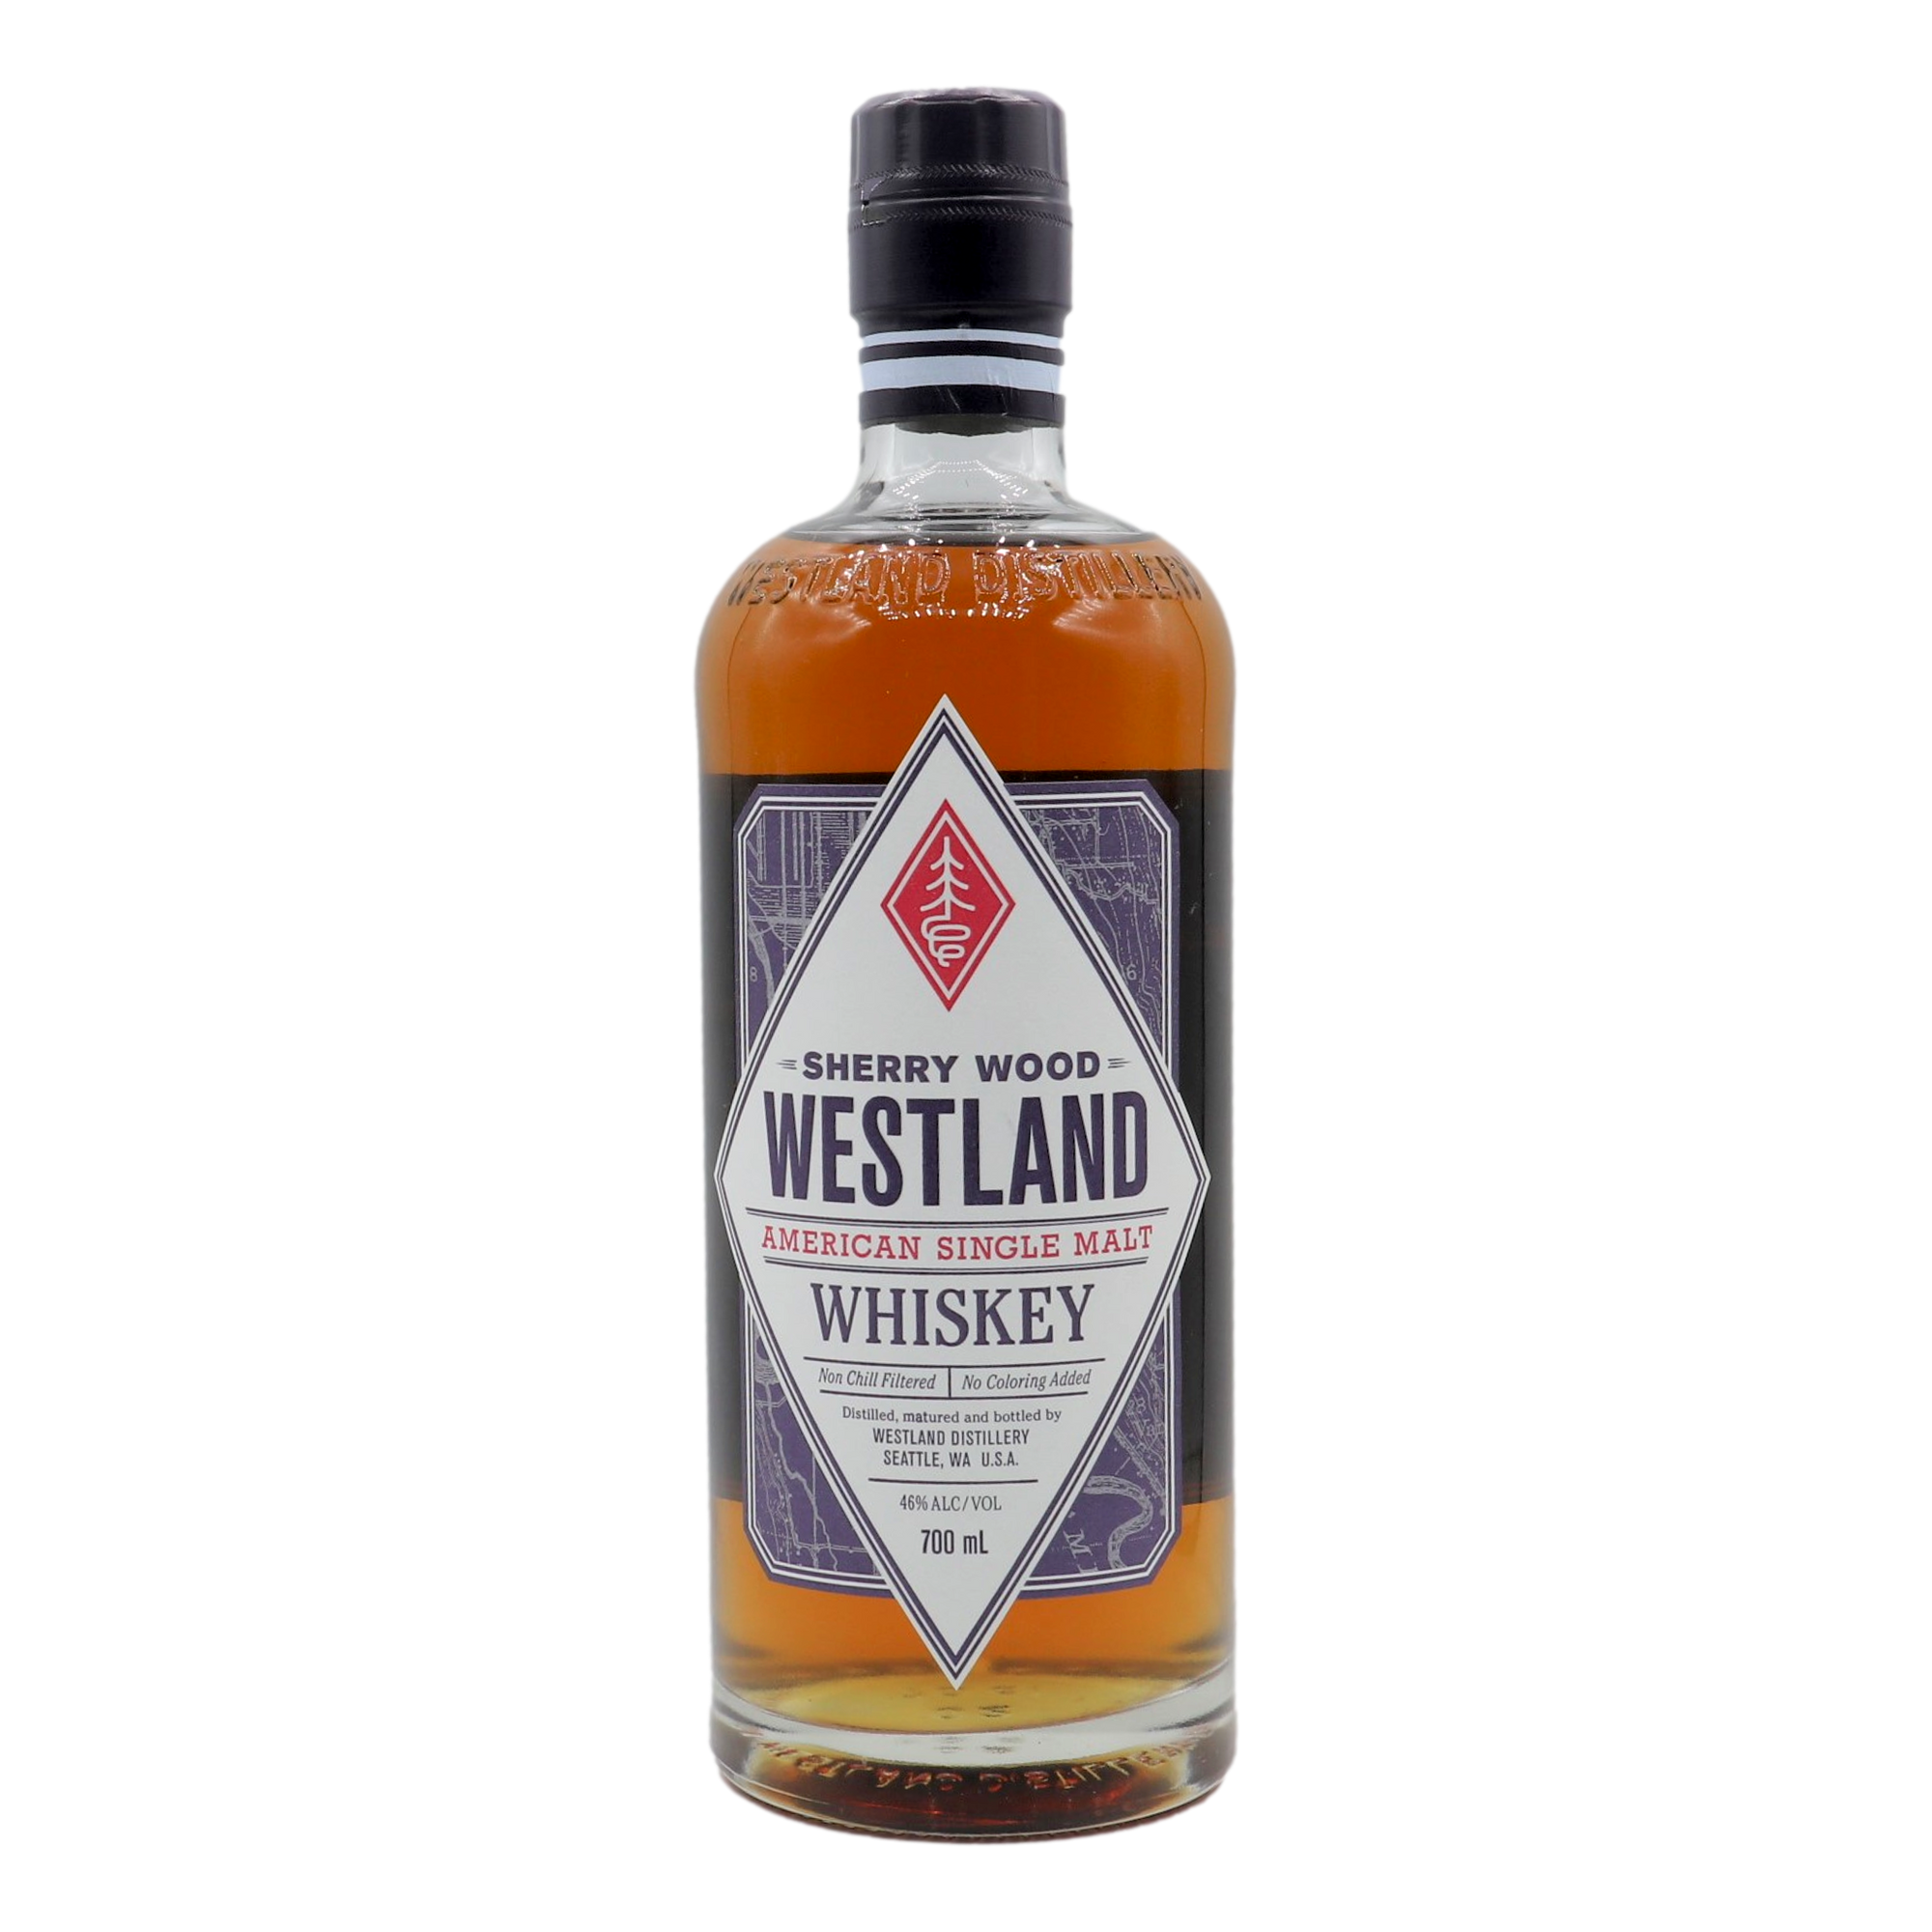 Westland Sherry Wood American Single Malt Whiskey 700ml